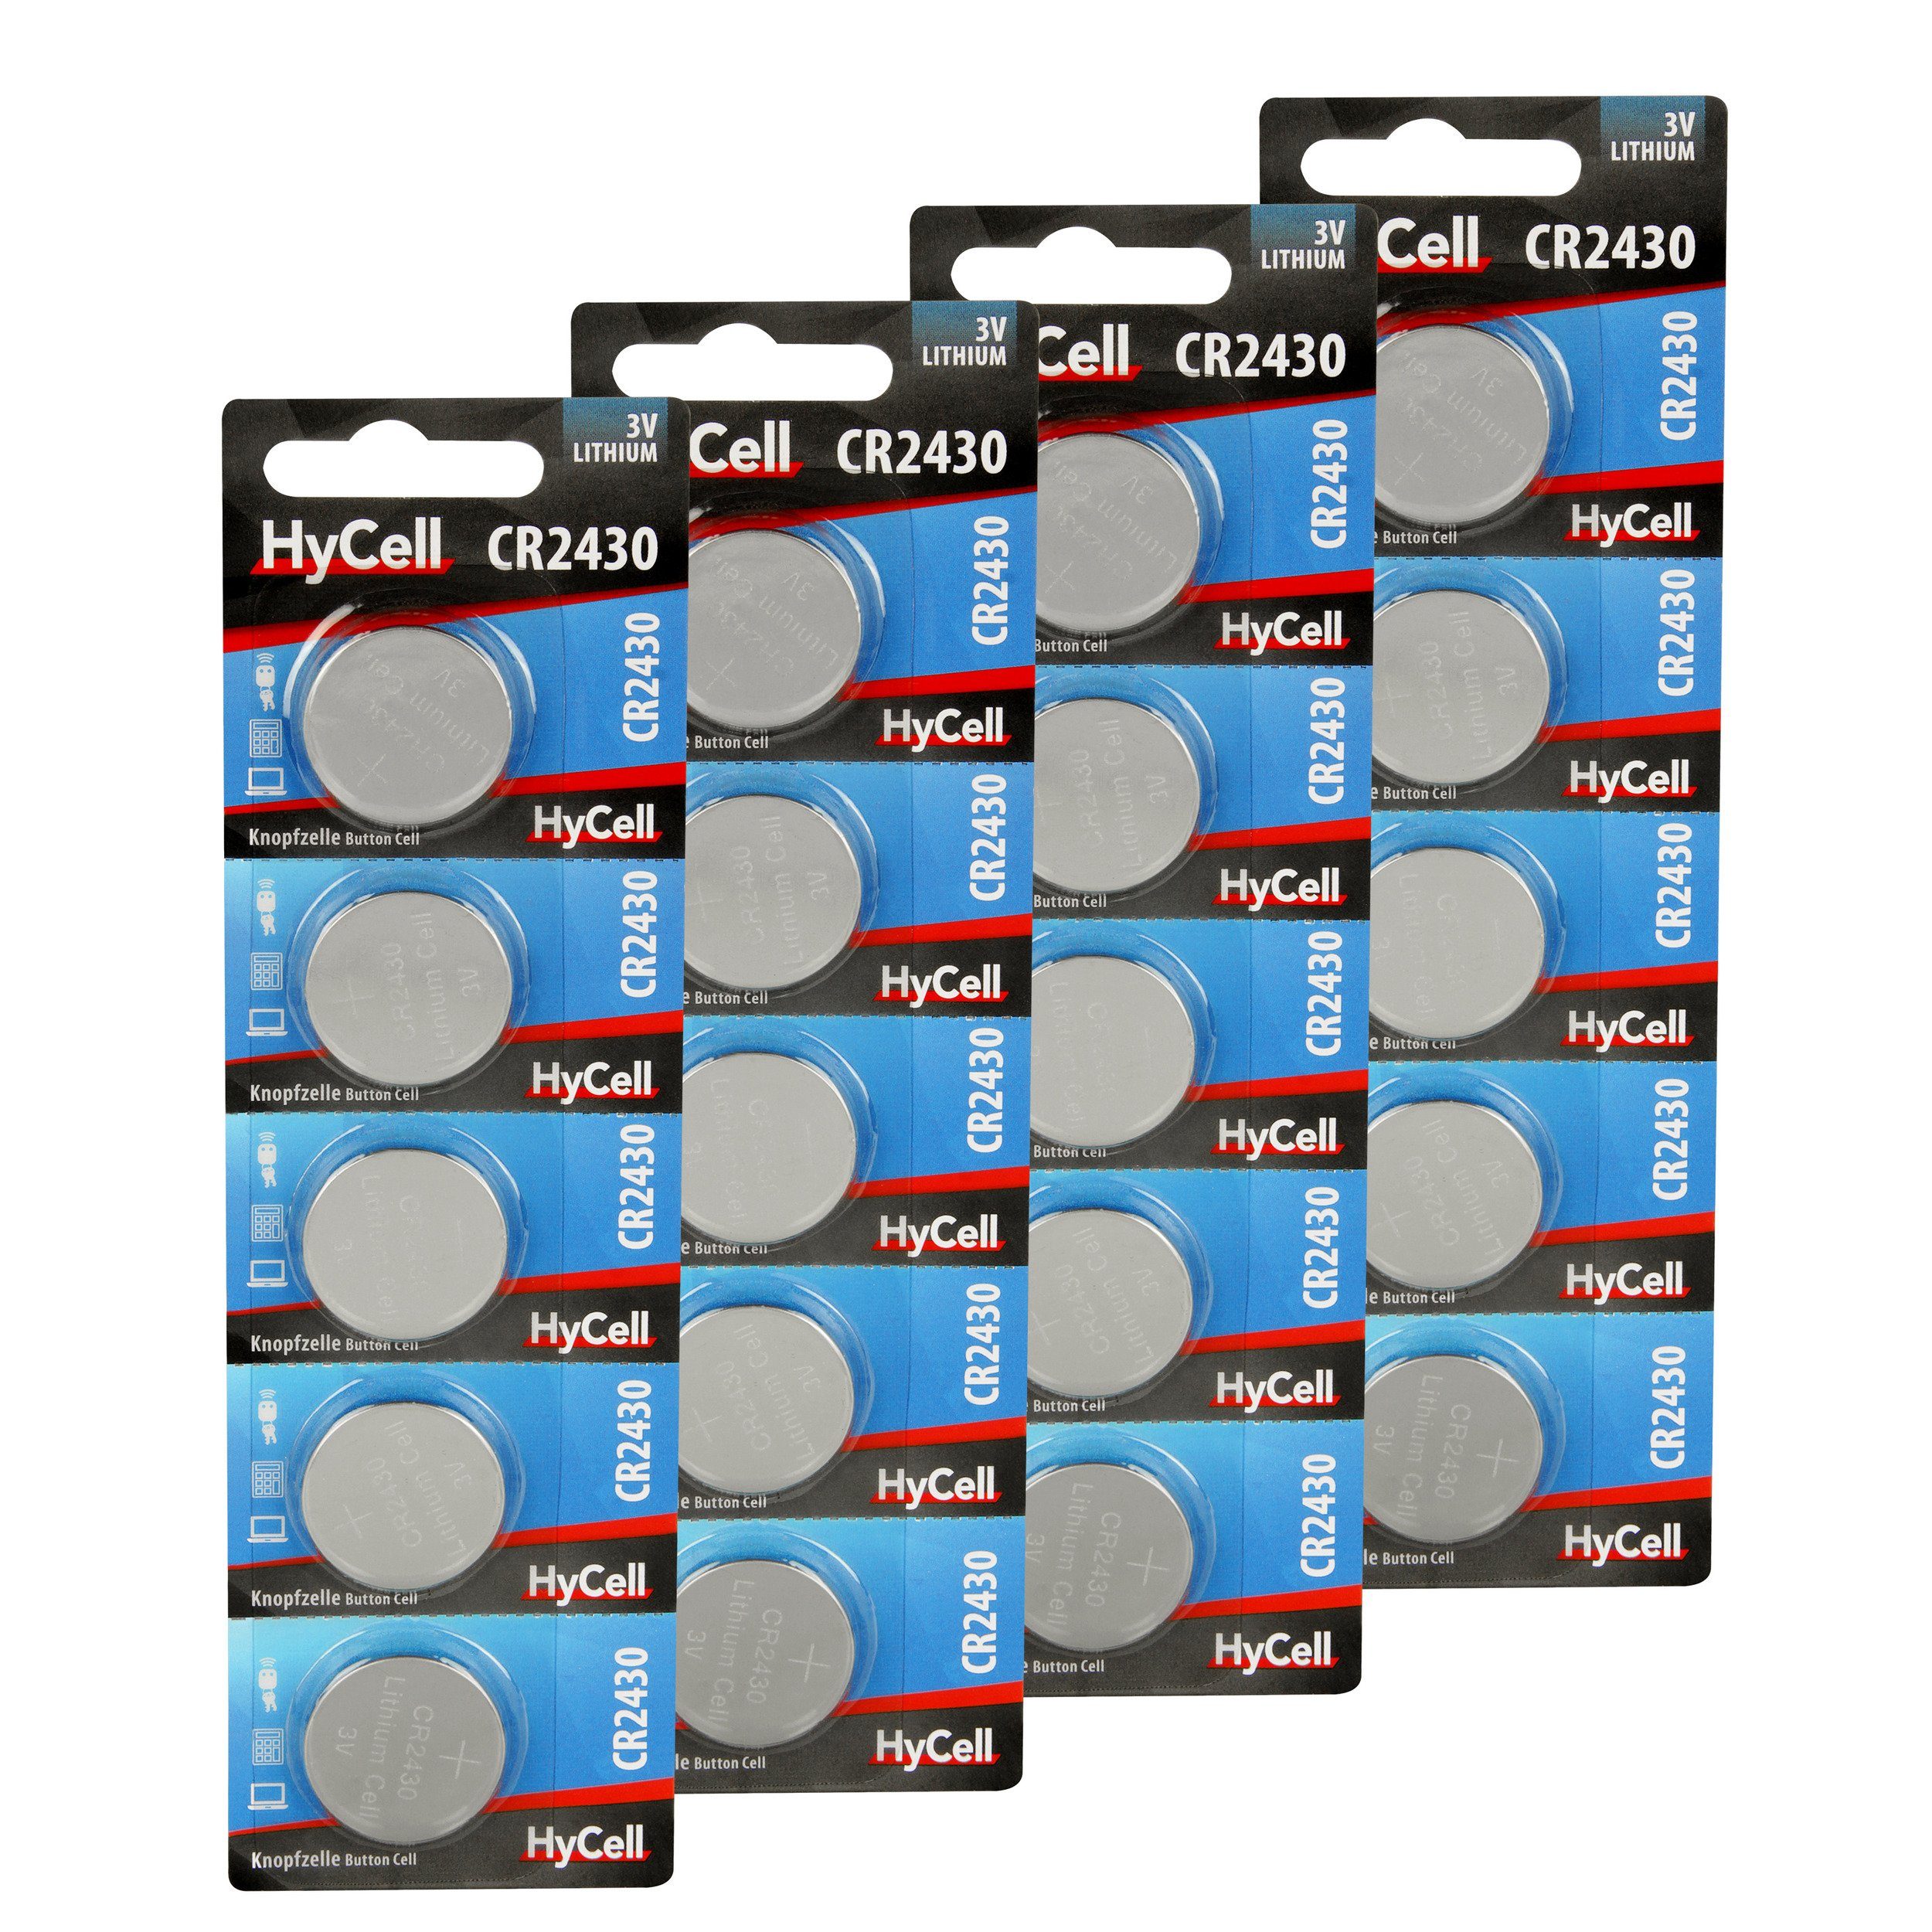 HyCell 20er Pack Lithium Knopfzellen CR2430 3V - Knopfbatterien - 20 Stück Knopfzelle